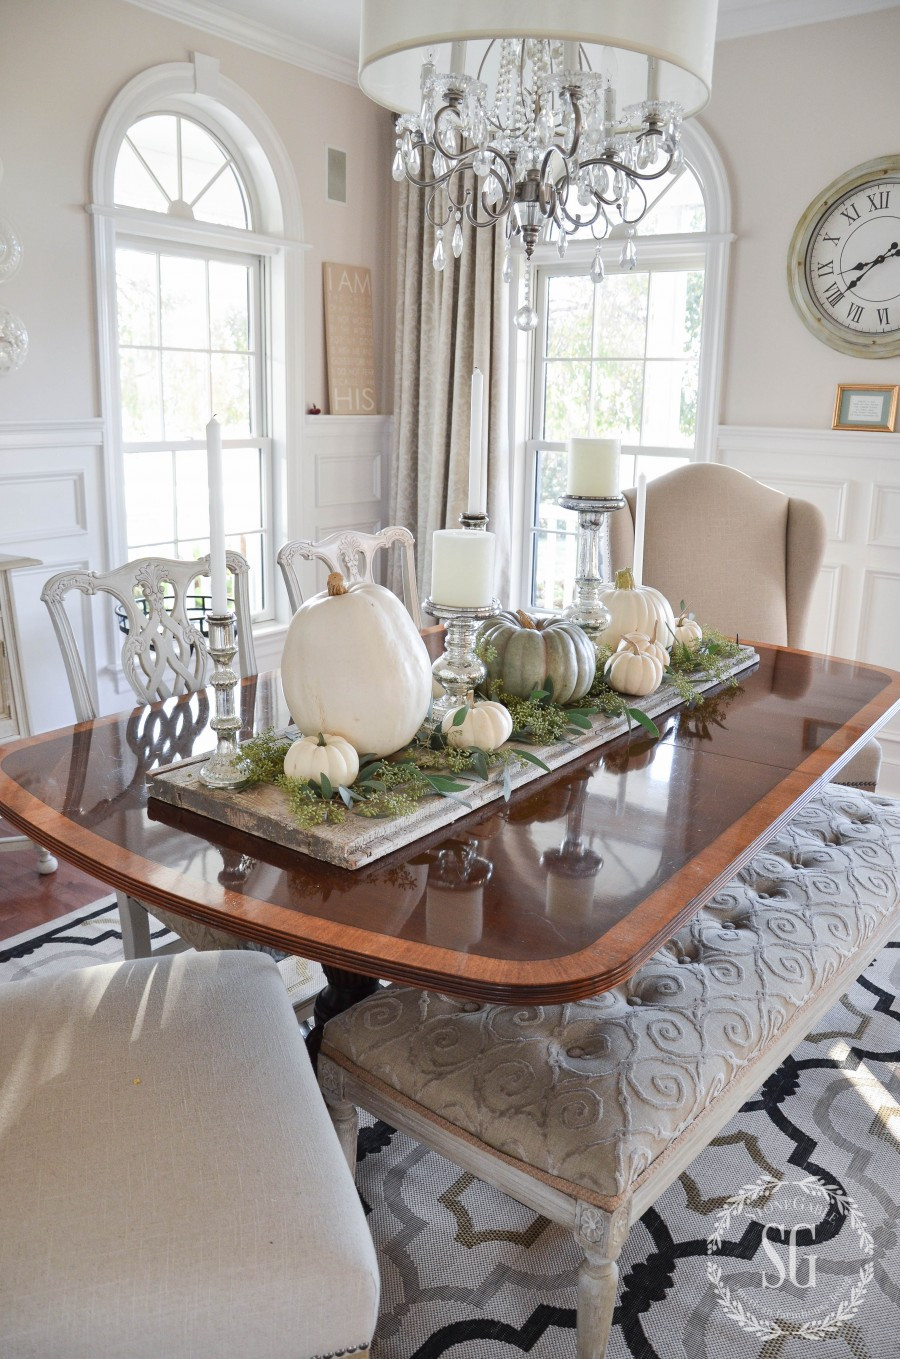 Thanksgiving Table Centerpieces
 EASY PUMPKIN THANKSGIVING TABLE